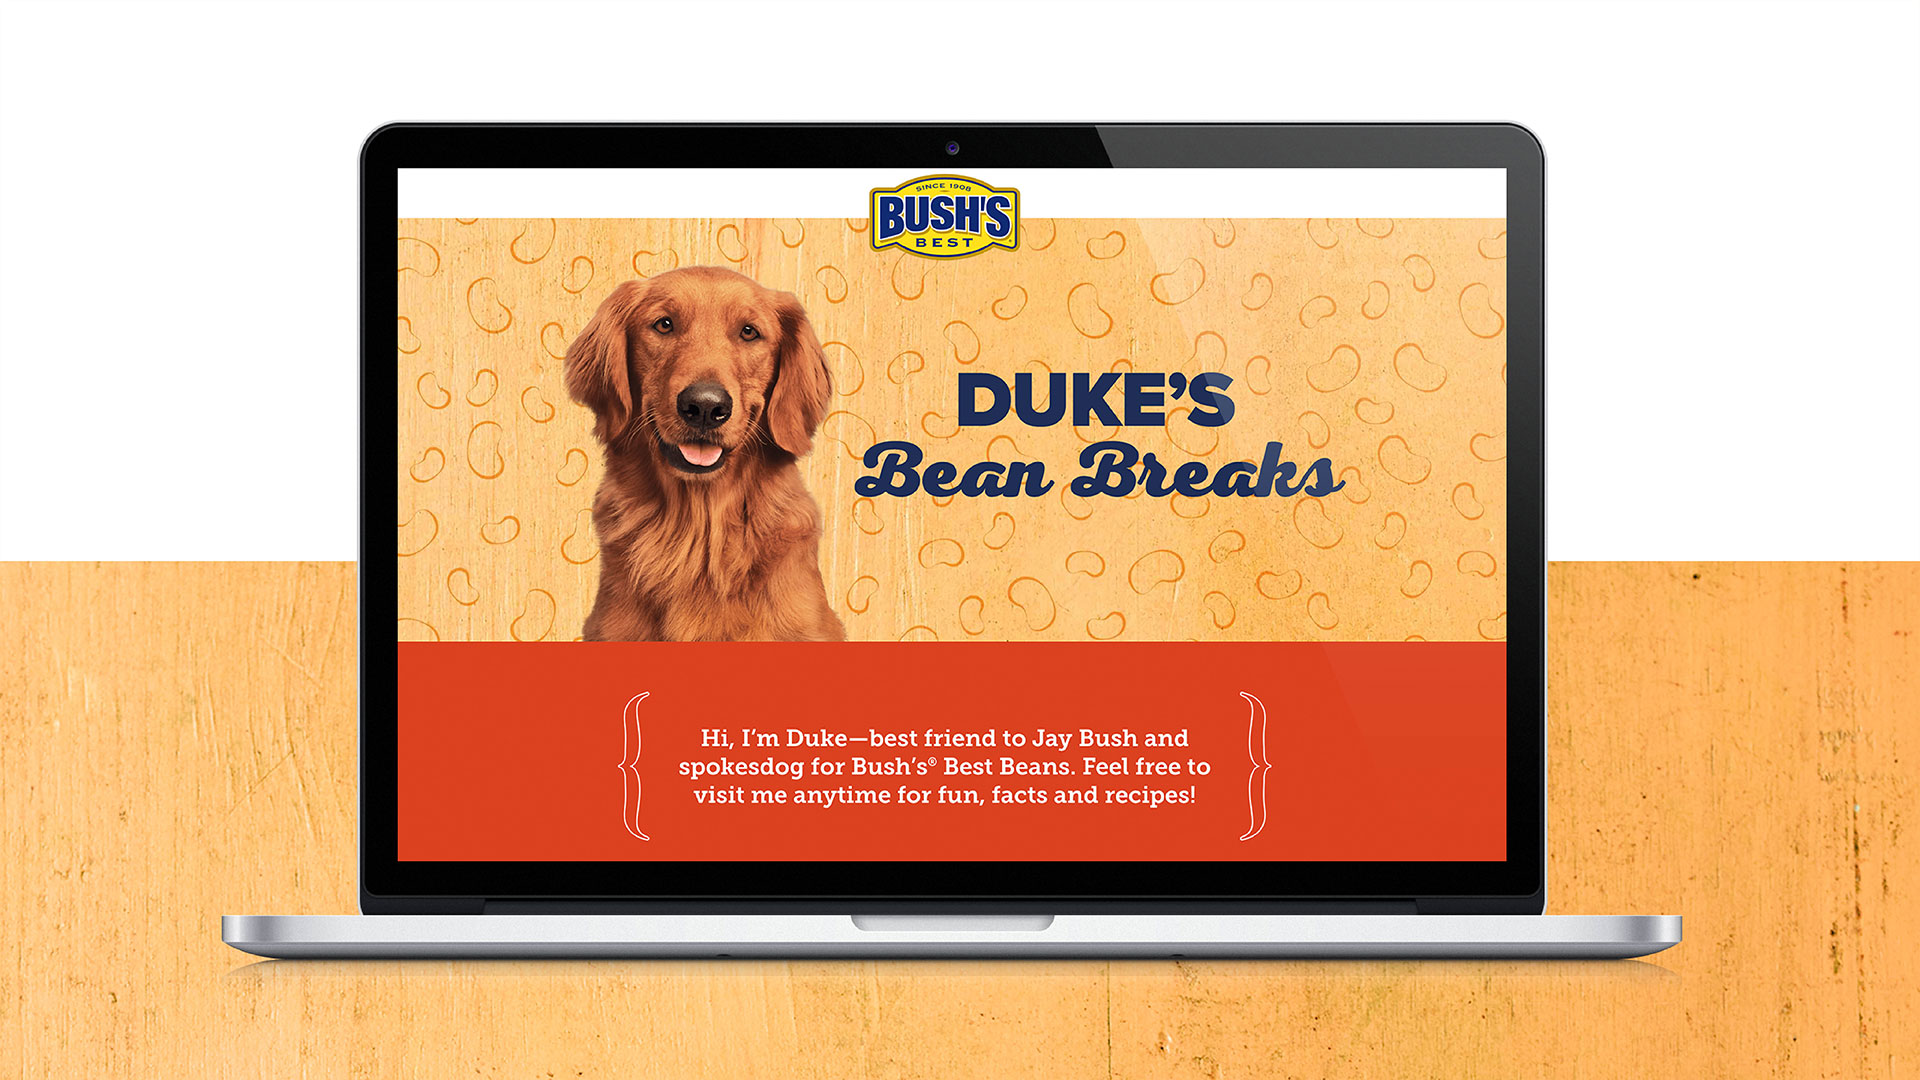 Bush’s K-12 Duke’s Bean Breaks: Hi, I’m Duke — best friend to Jay Bush and spokesdog for Bush’s® Best Beans. Feel free to visit me anytime for fun, facts and recipes!